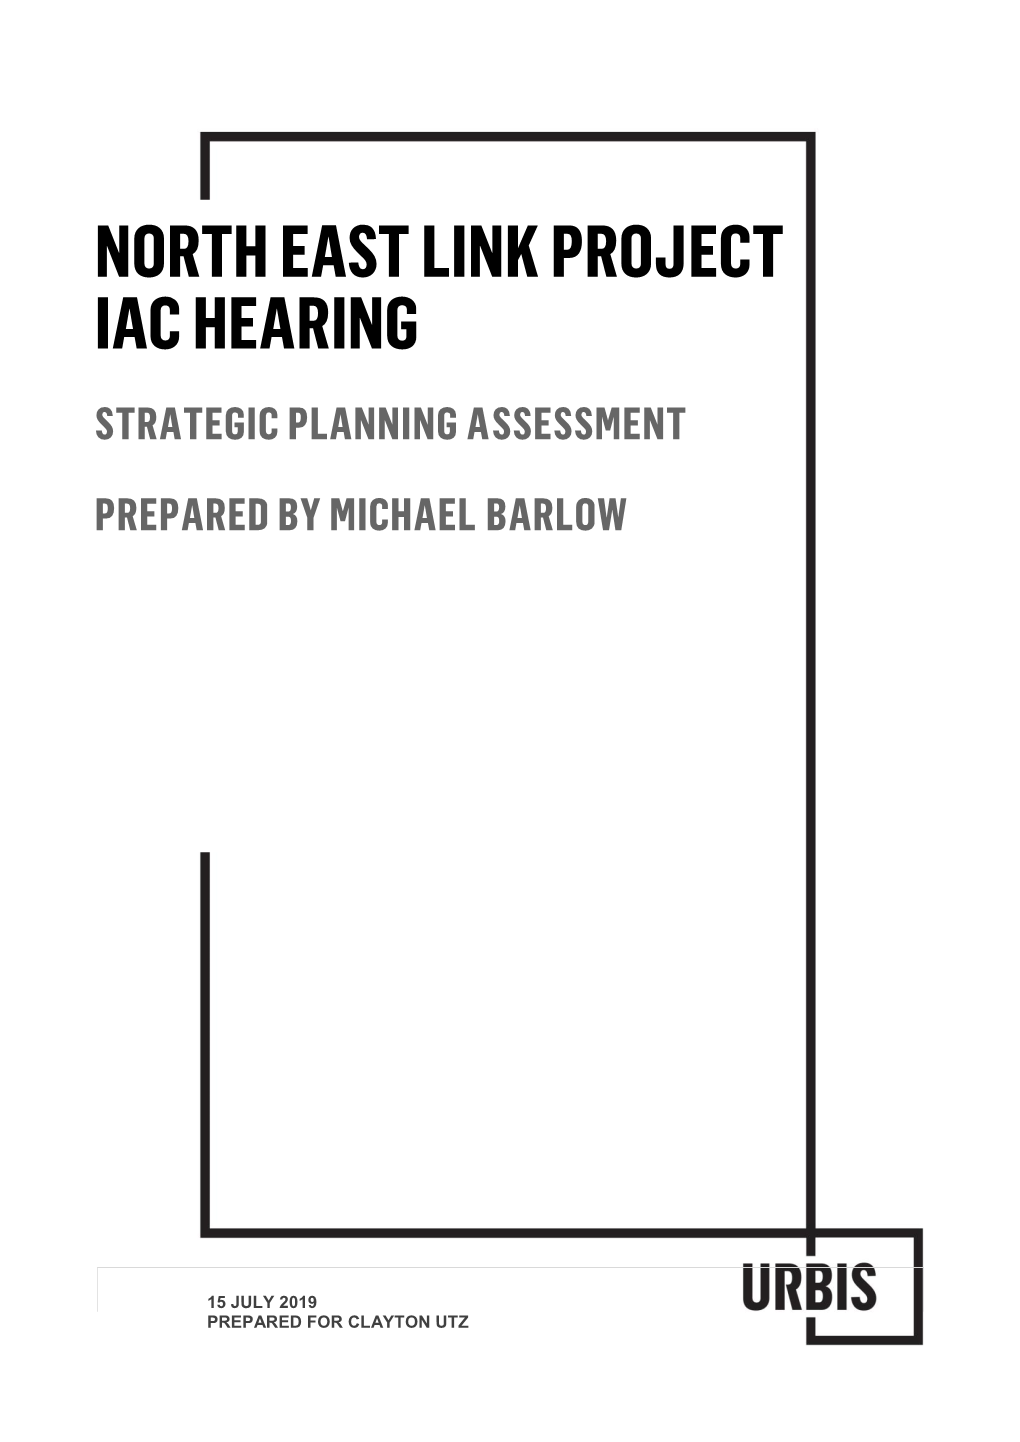 North East Link Project Iac Hearing Strategic Planning Assessment